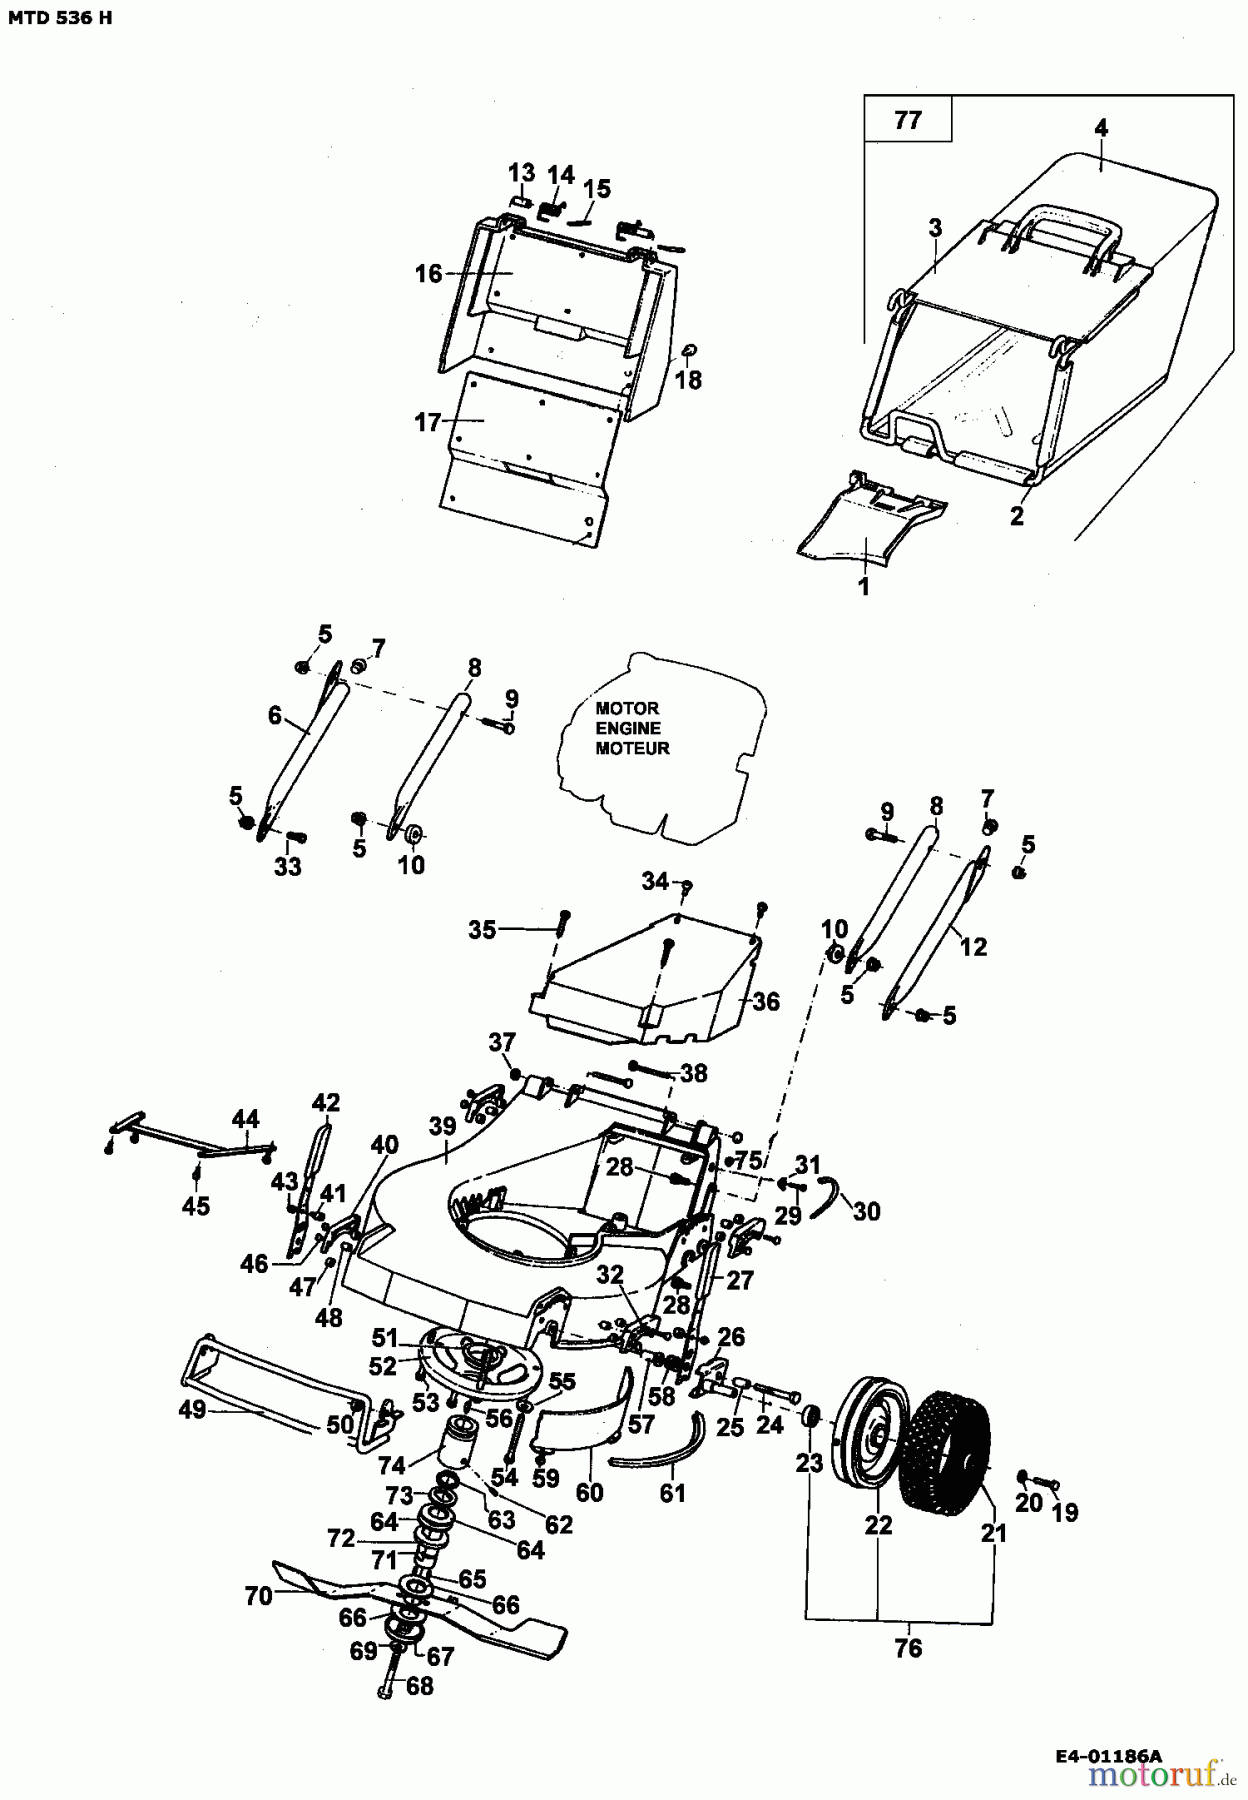  MTD Petrol mower self propelled 536 H 902B530A001  (1995) Basic machine